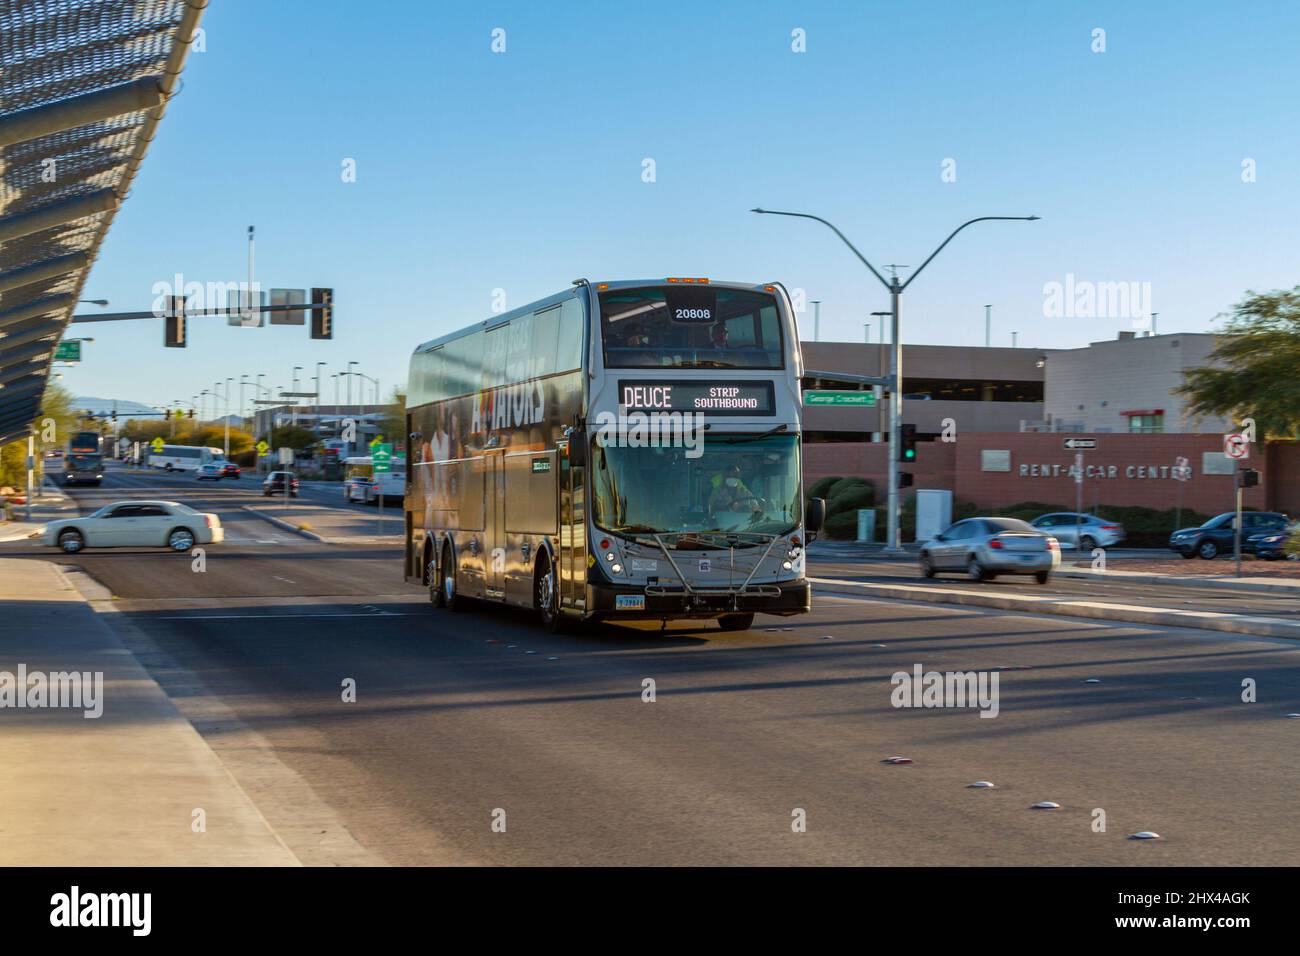 Las Vegas, NV, USA – February 17, 2022: A double decker public bus traveling on a street in Las Vegas, Nevada. Stock Photo